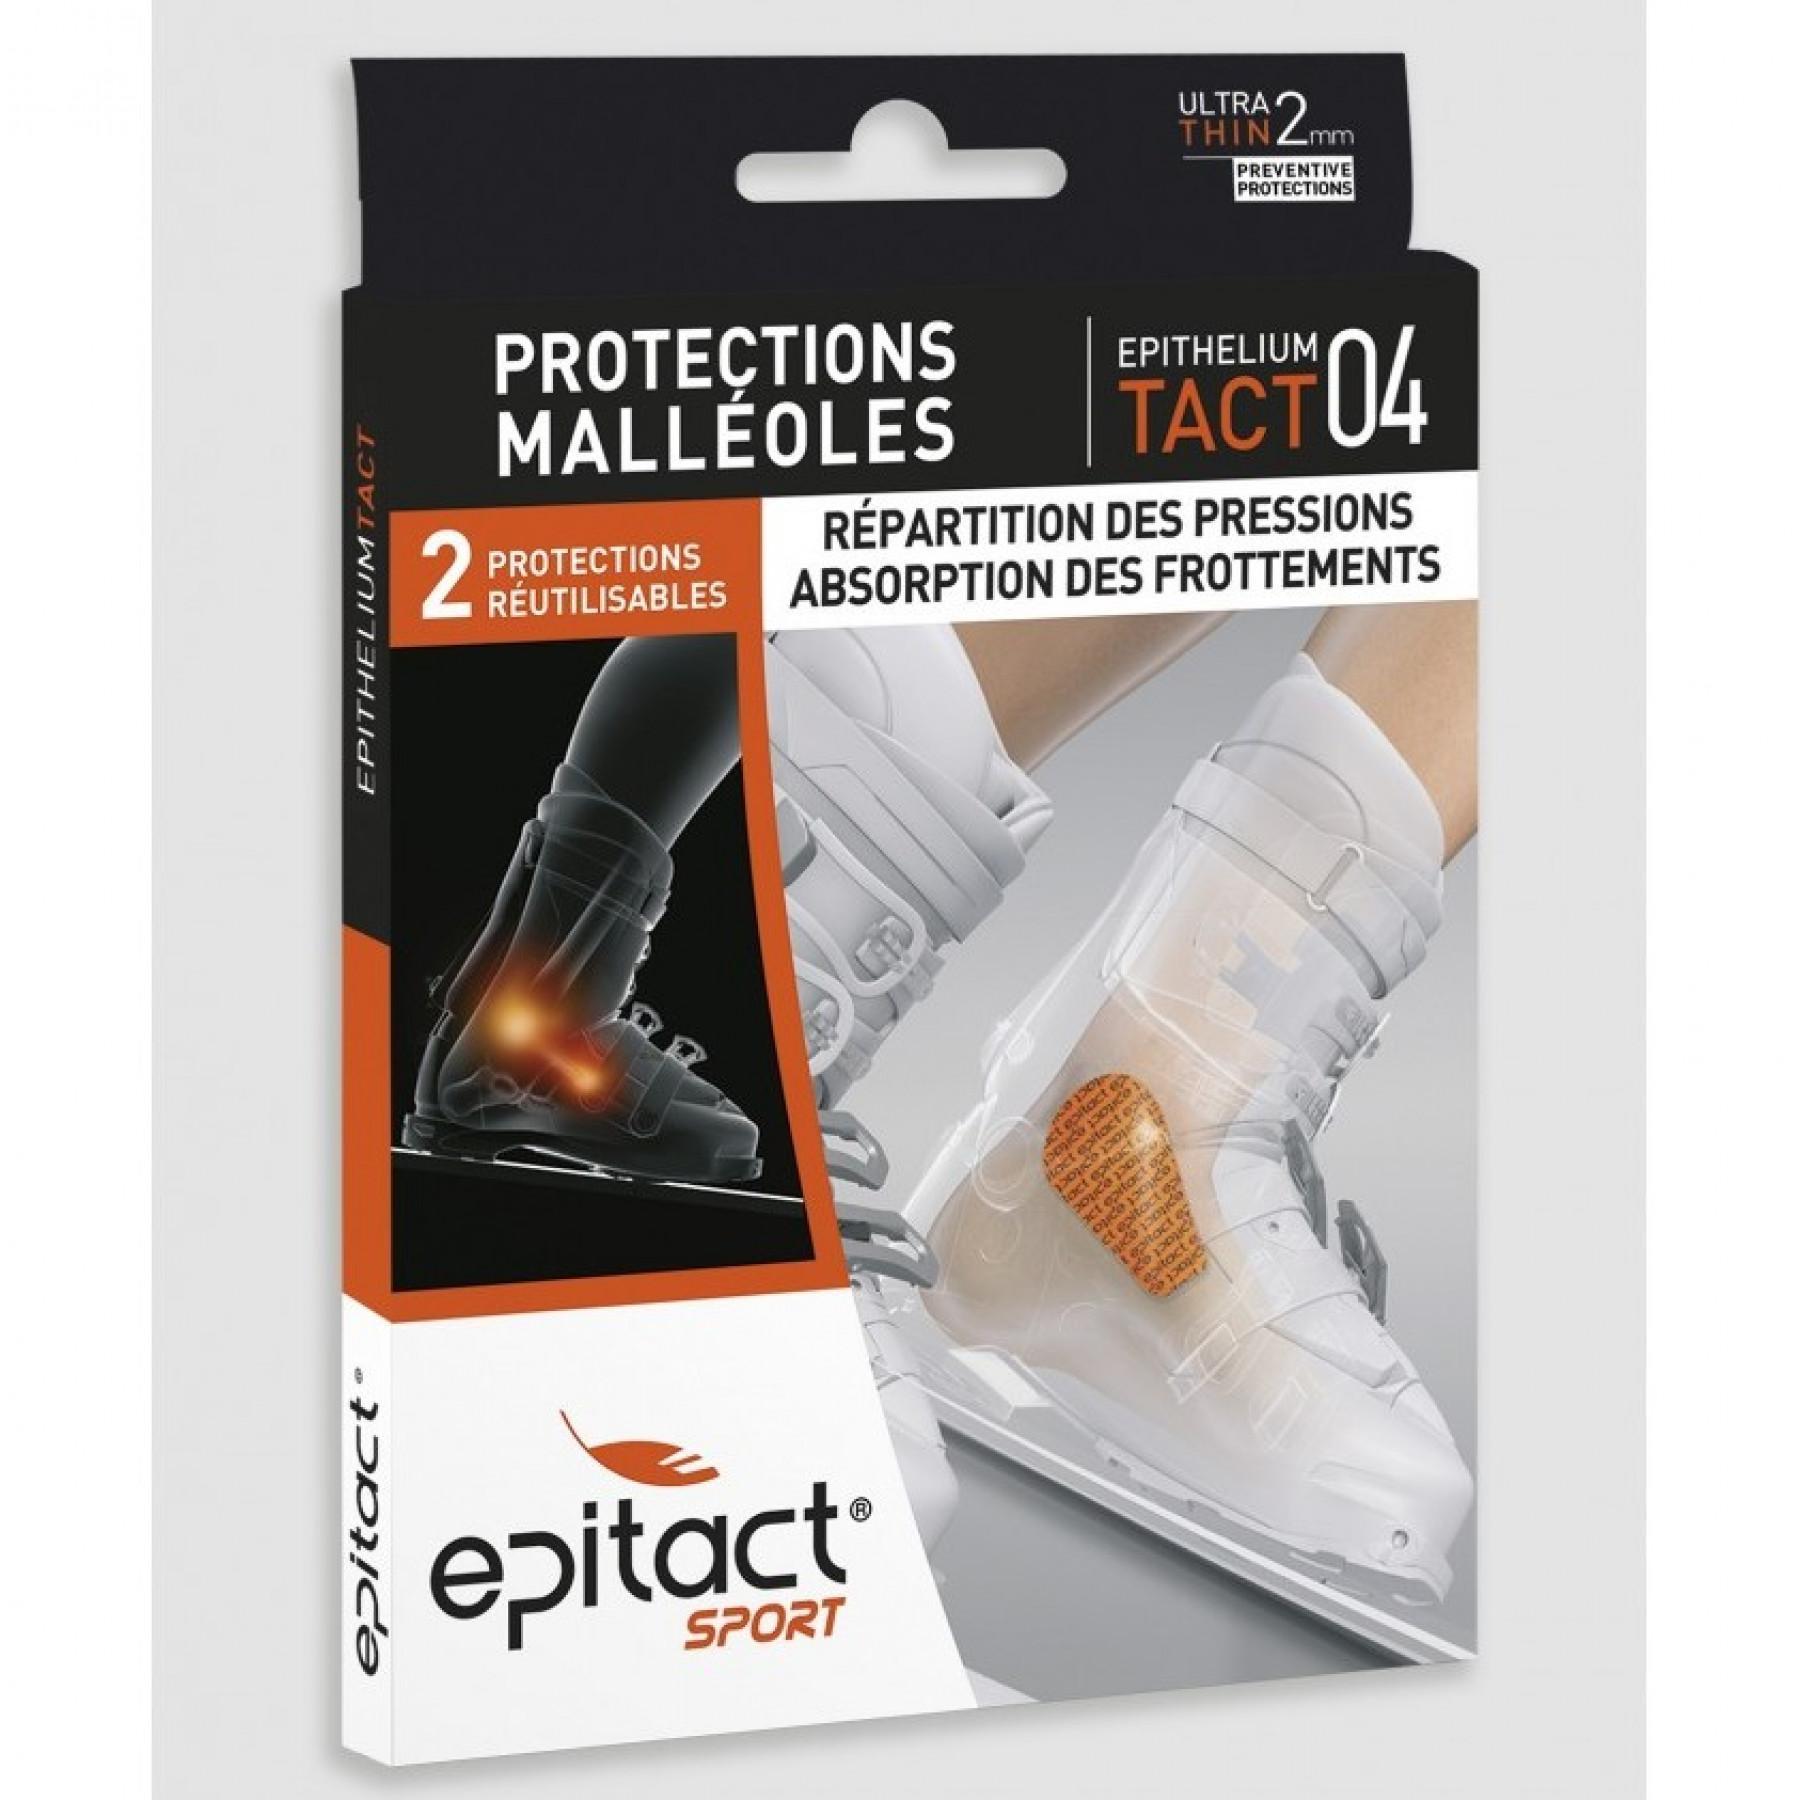 Malleolar protections Epitact EPITHELIUMTACT 04 (lot de 2 protections)